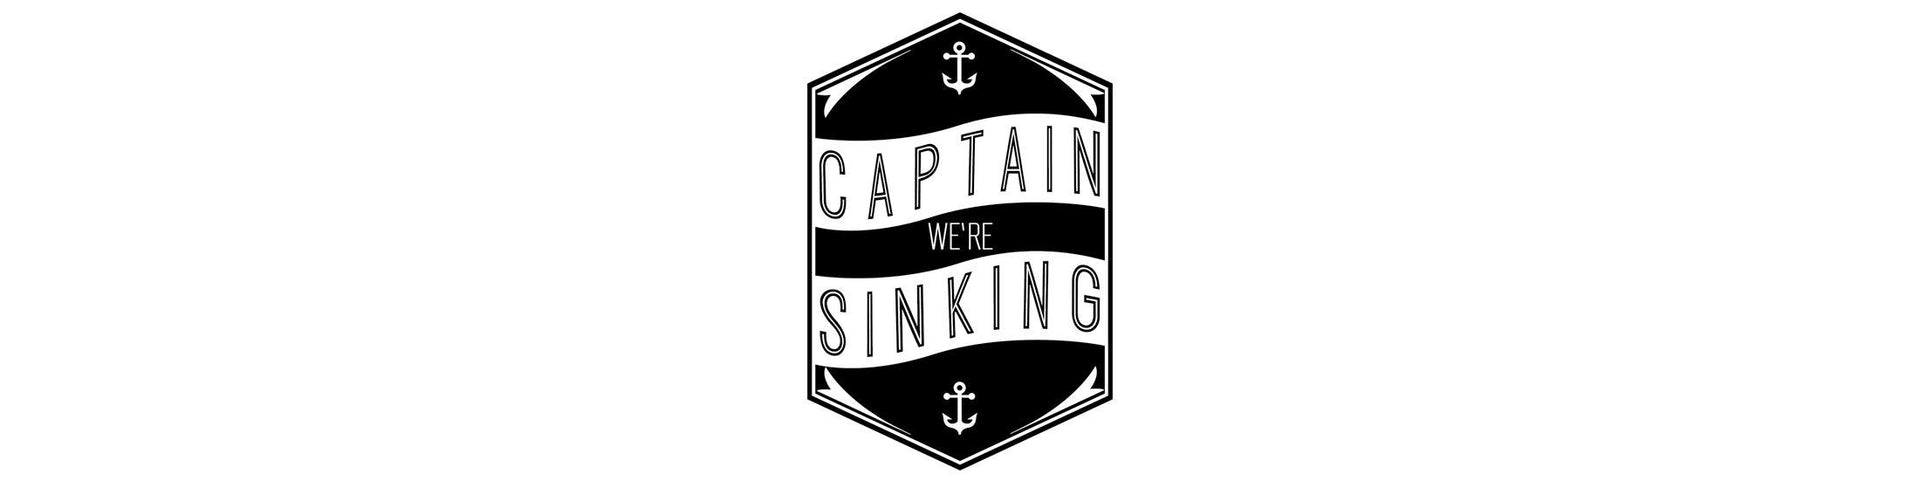 Shop – Captain, We're Sinking – Band & Music Merch – Cold Cuts Merch